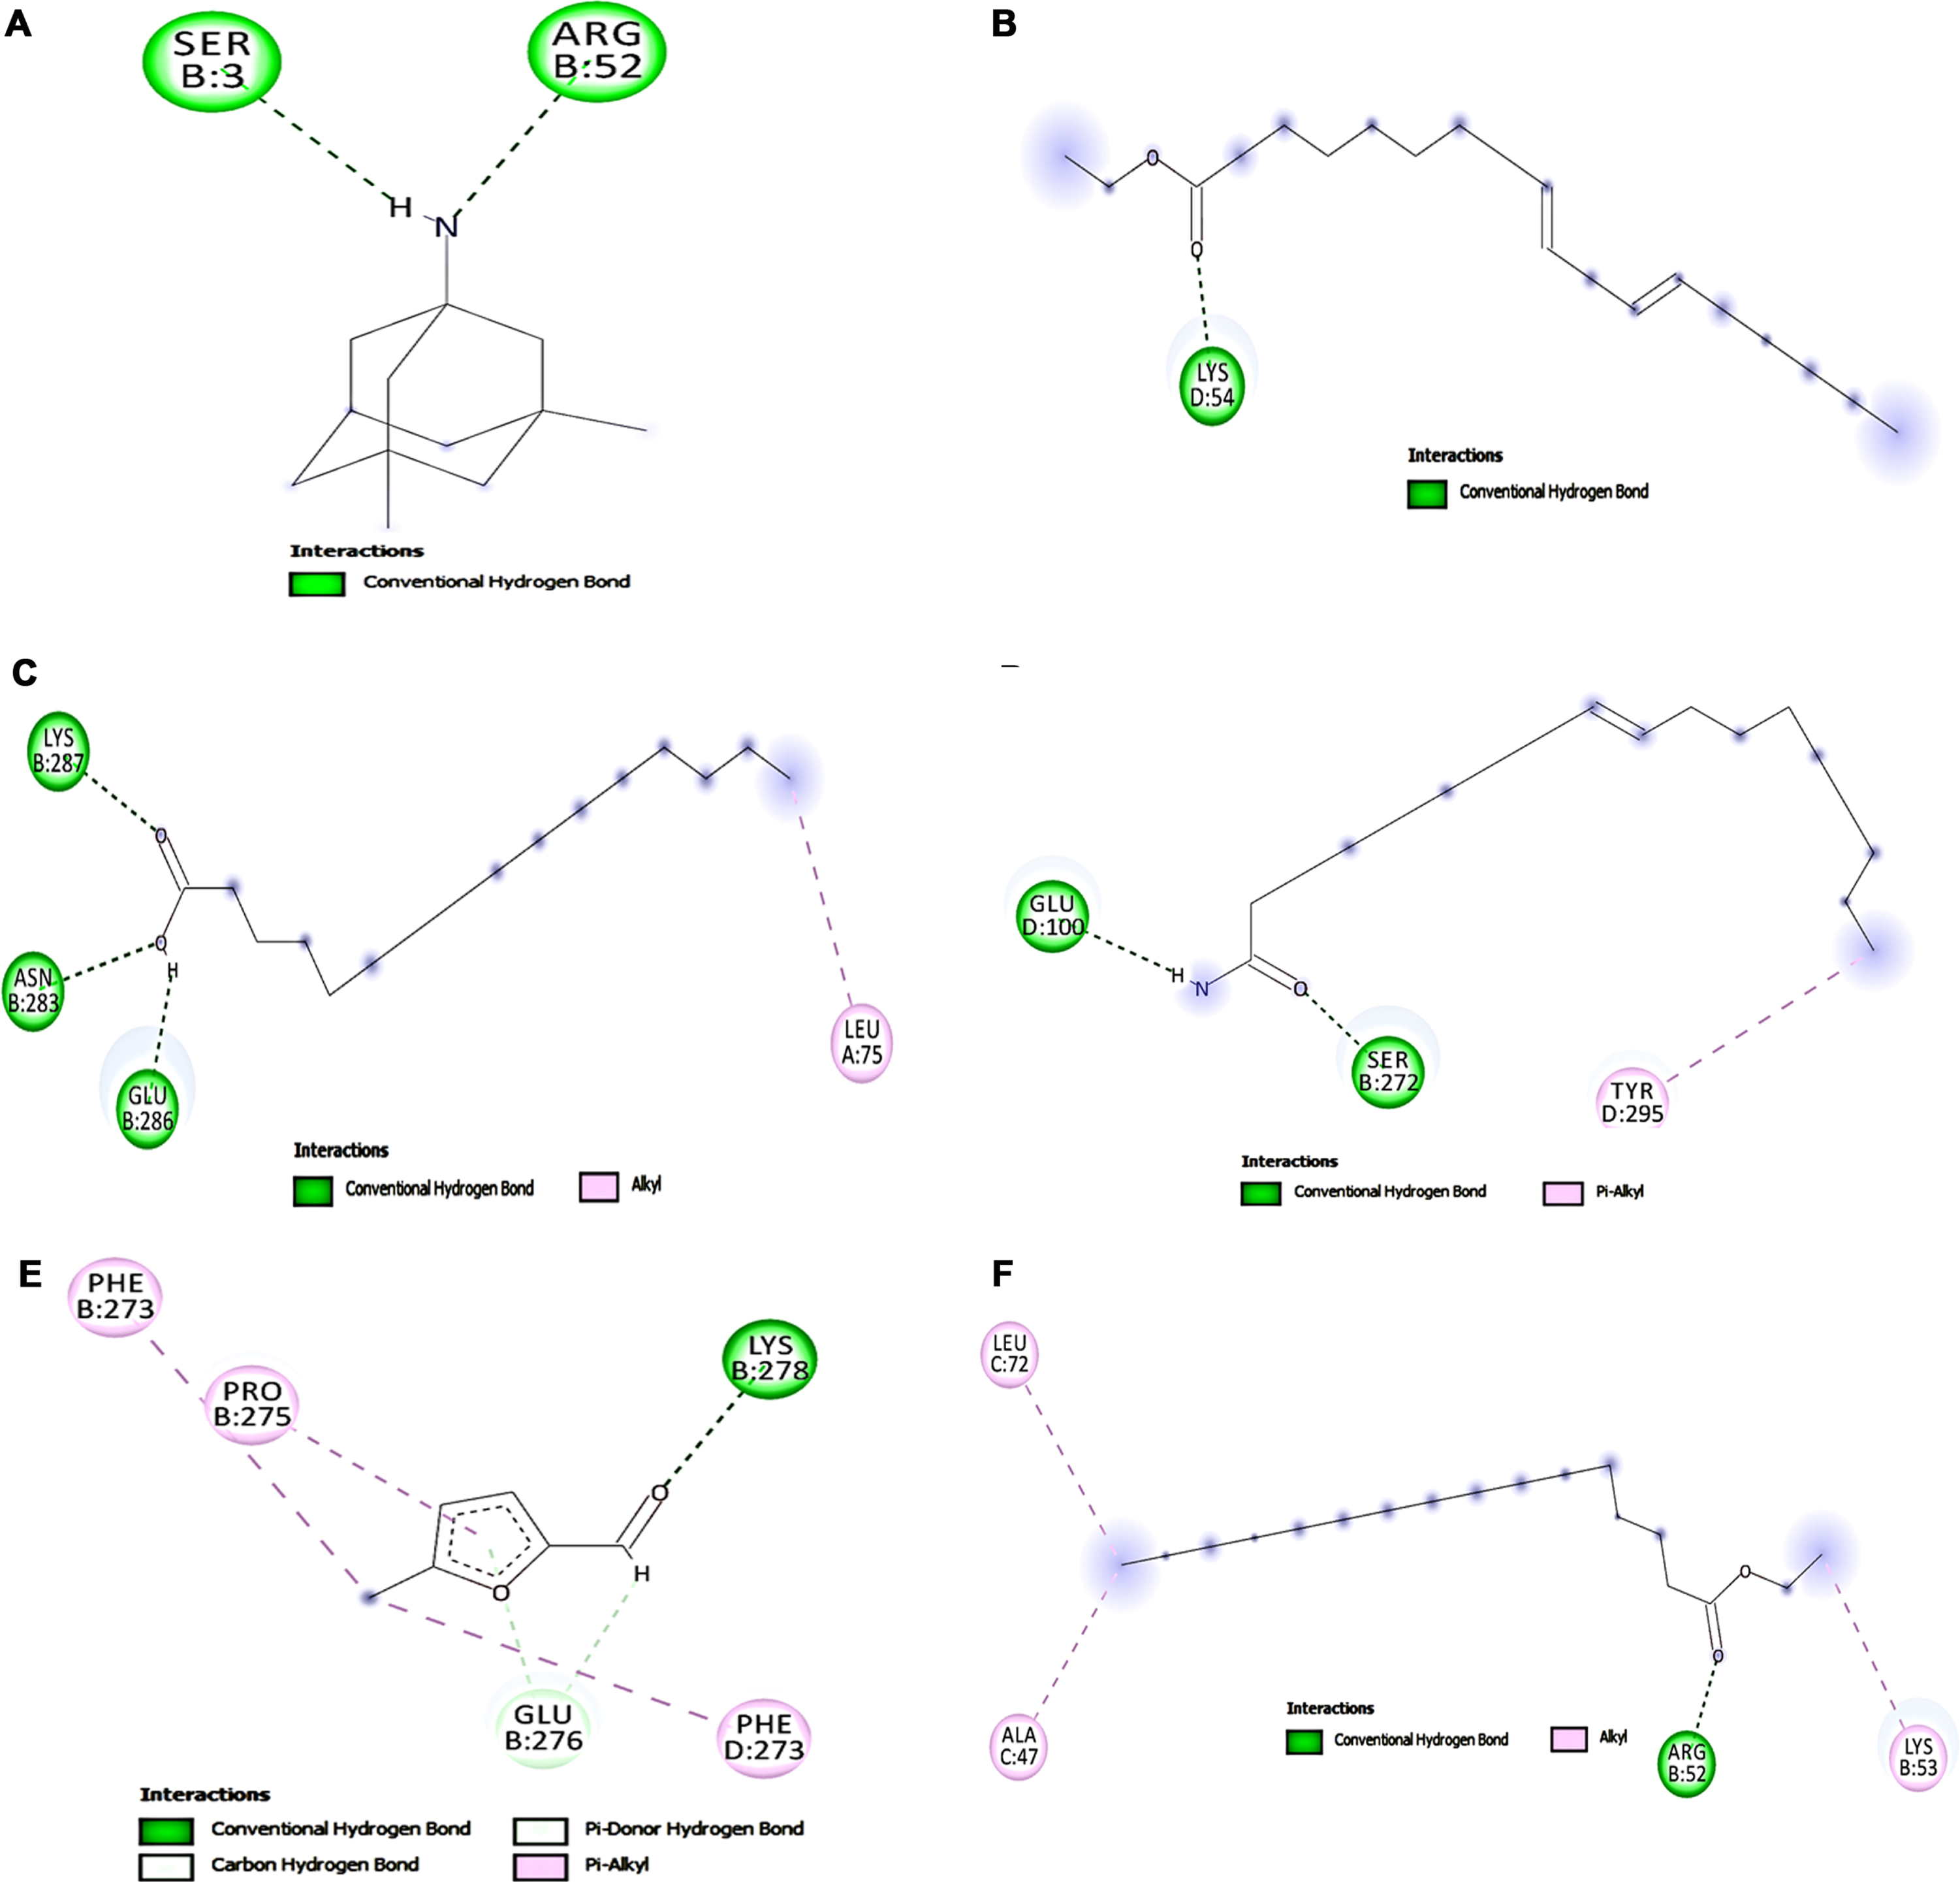 Molecular docking analysis of top 5 compounds in HS against NMDAR (A) Memantine (B) Ethyl linoleate (C) Palmitic acid (D) Oleamide (E) 5-methylfurfural (F) Ethyl palmitate.